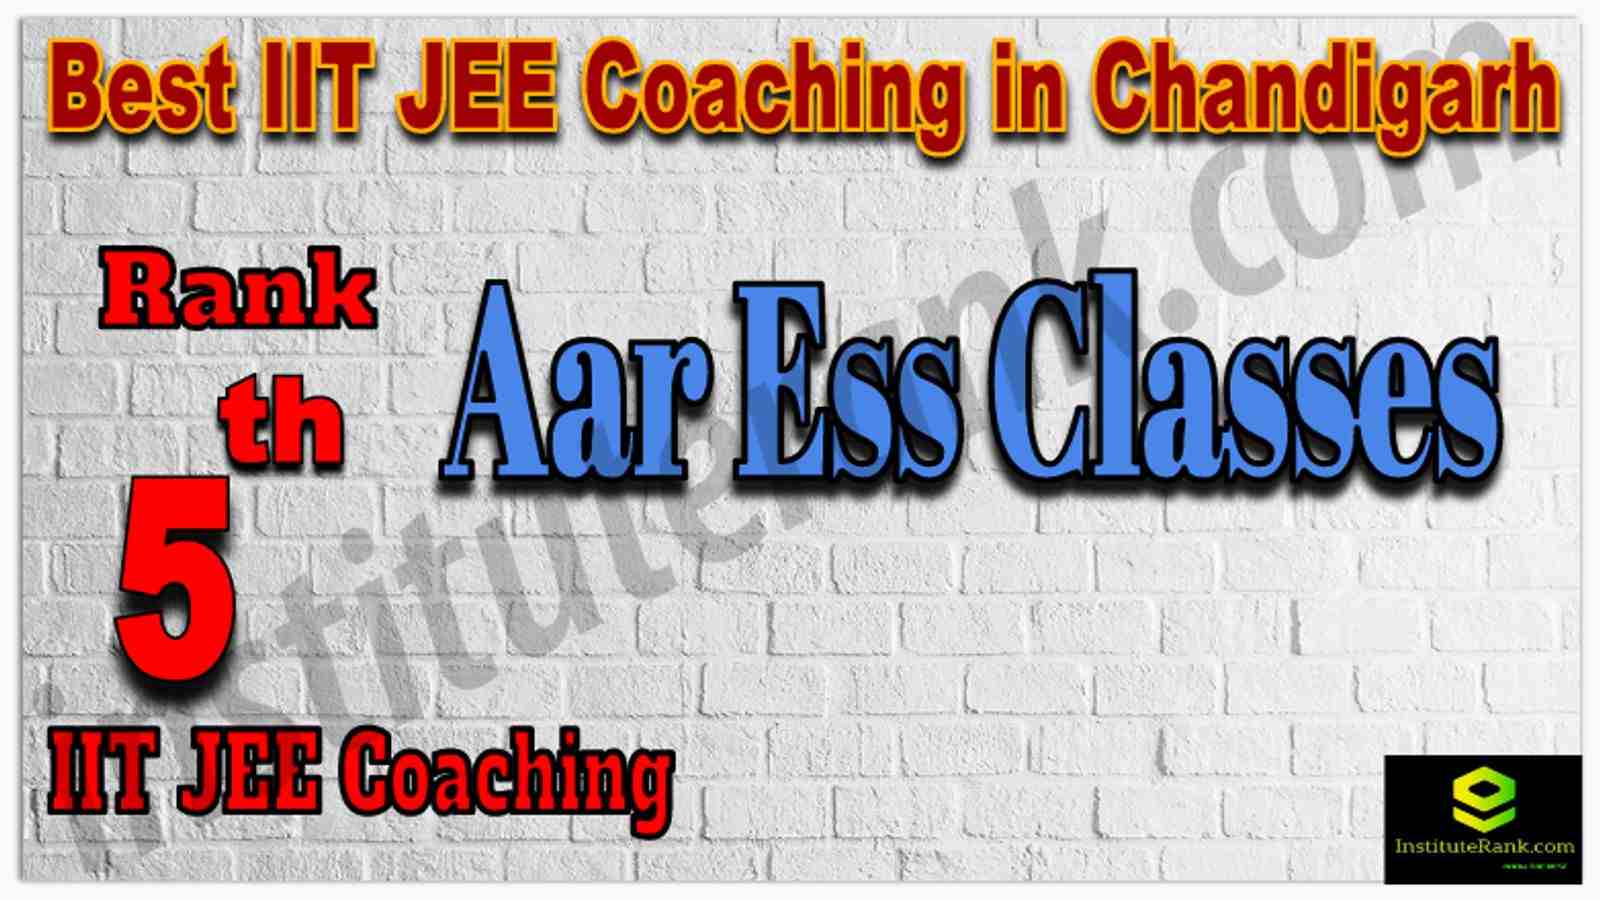 Rank 5th Best IIT JEE Coaching in Chandigarh